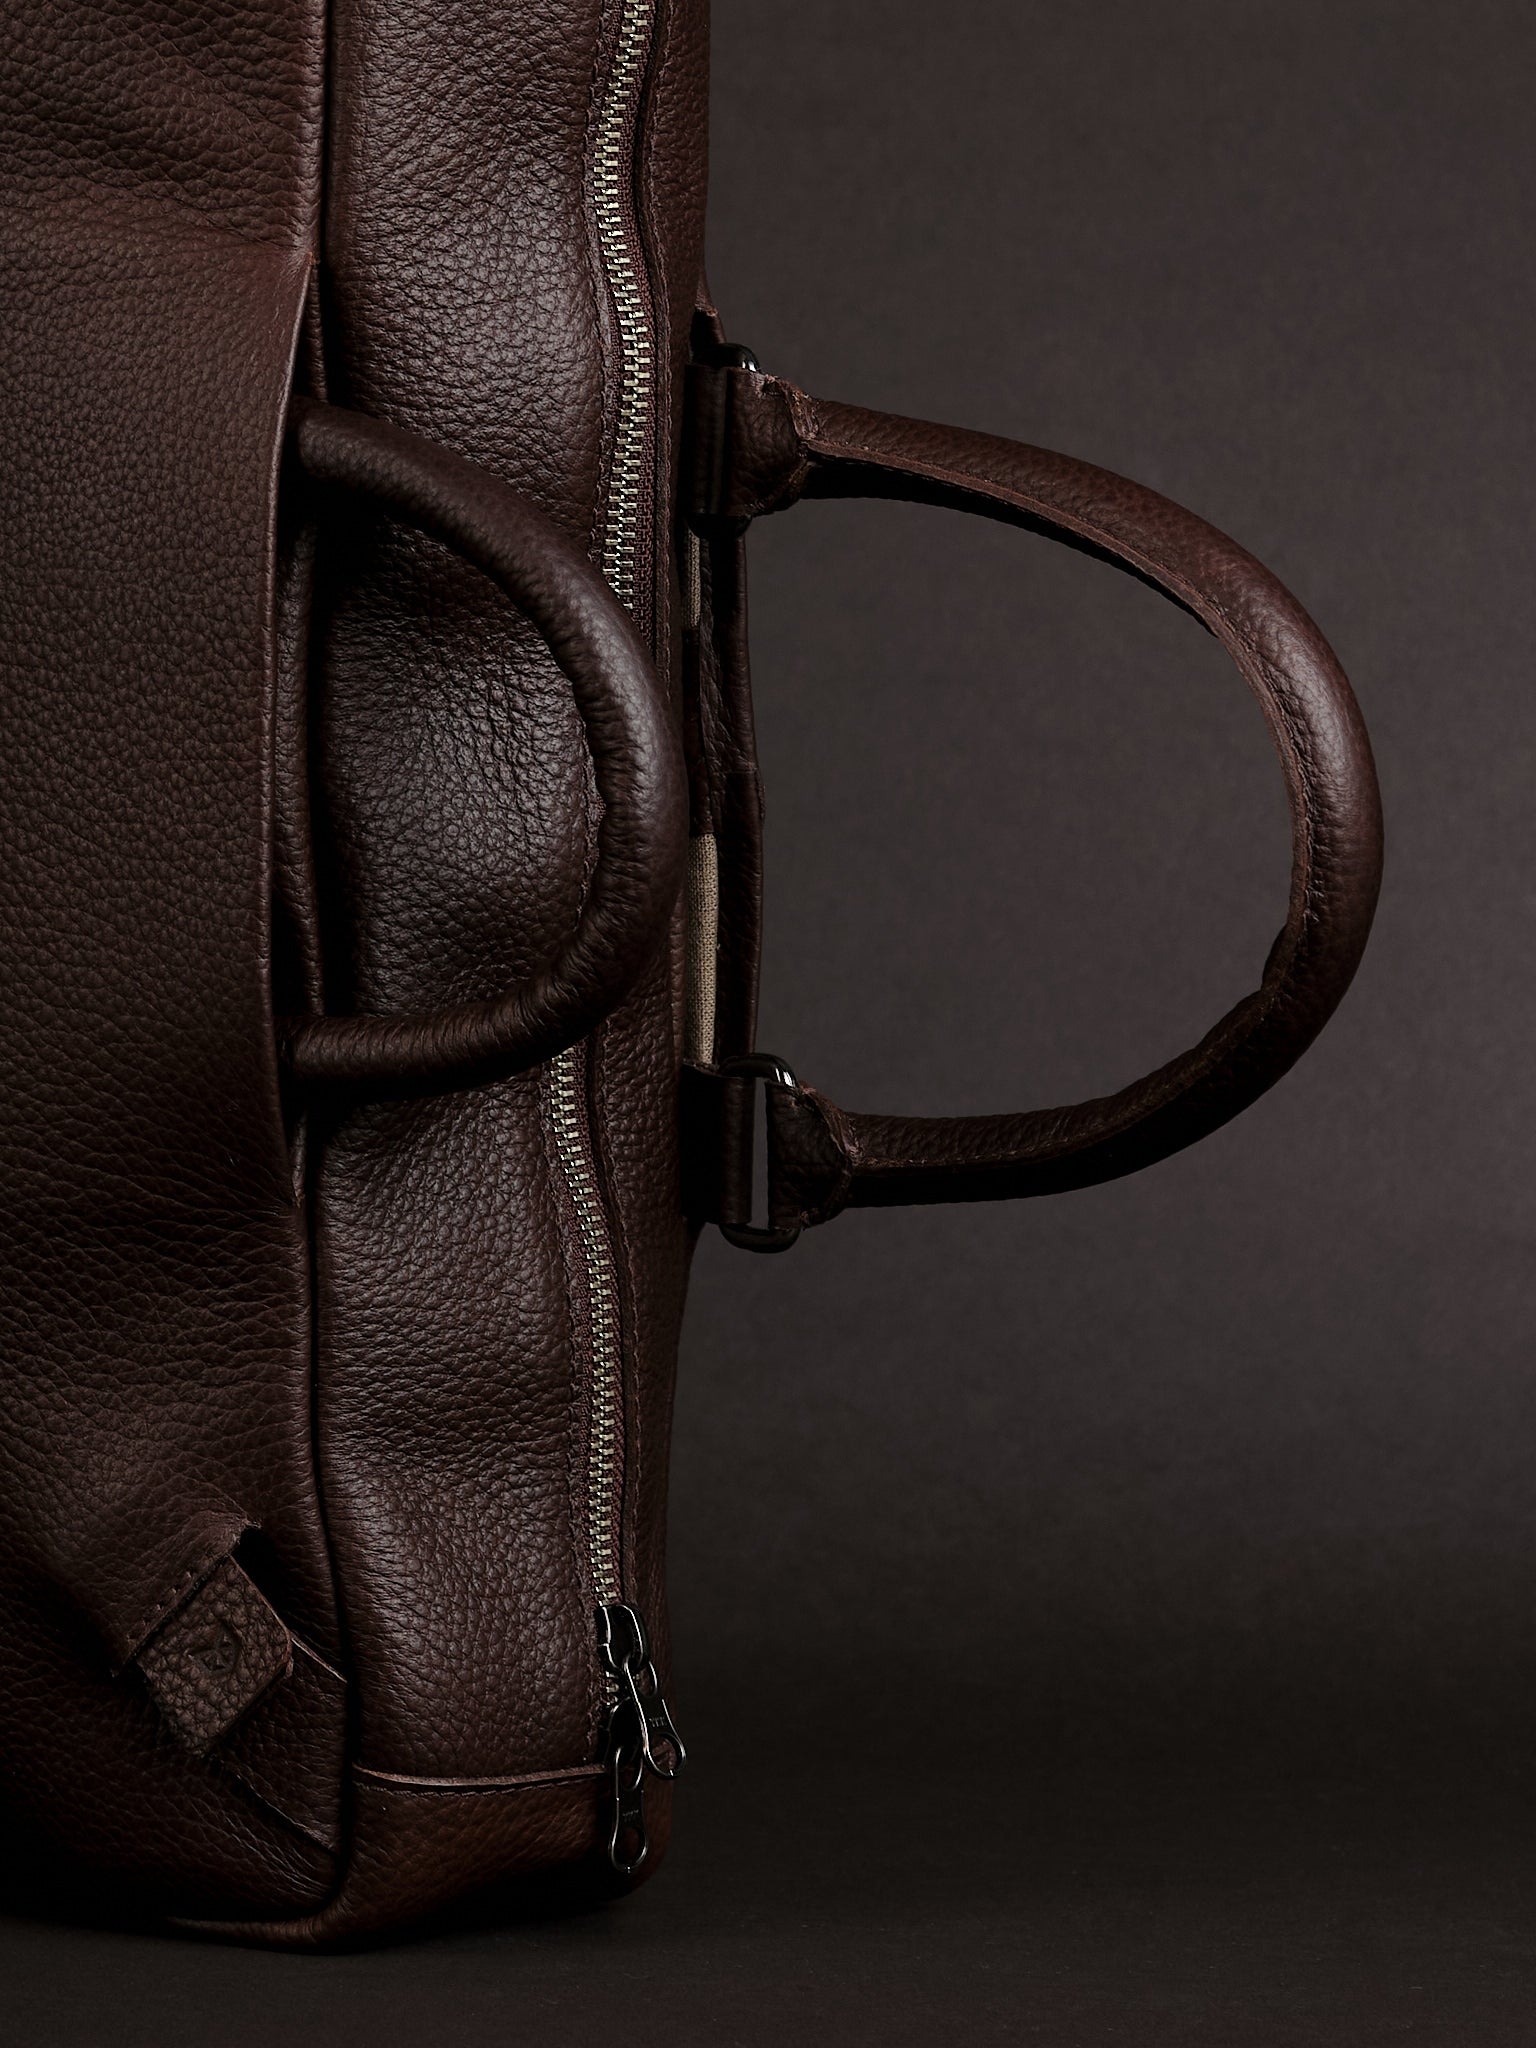 Retractable handles. Hybrid Backpack Briefcase. Handmade Leather Briefcase Dark Brown by Capra